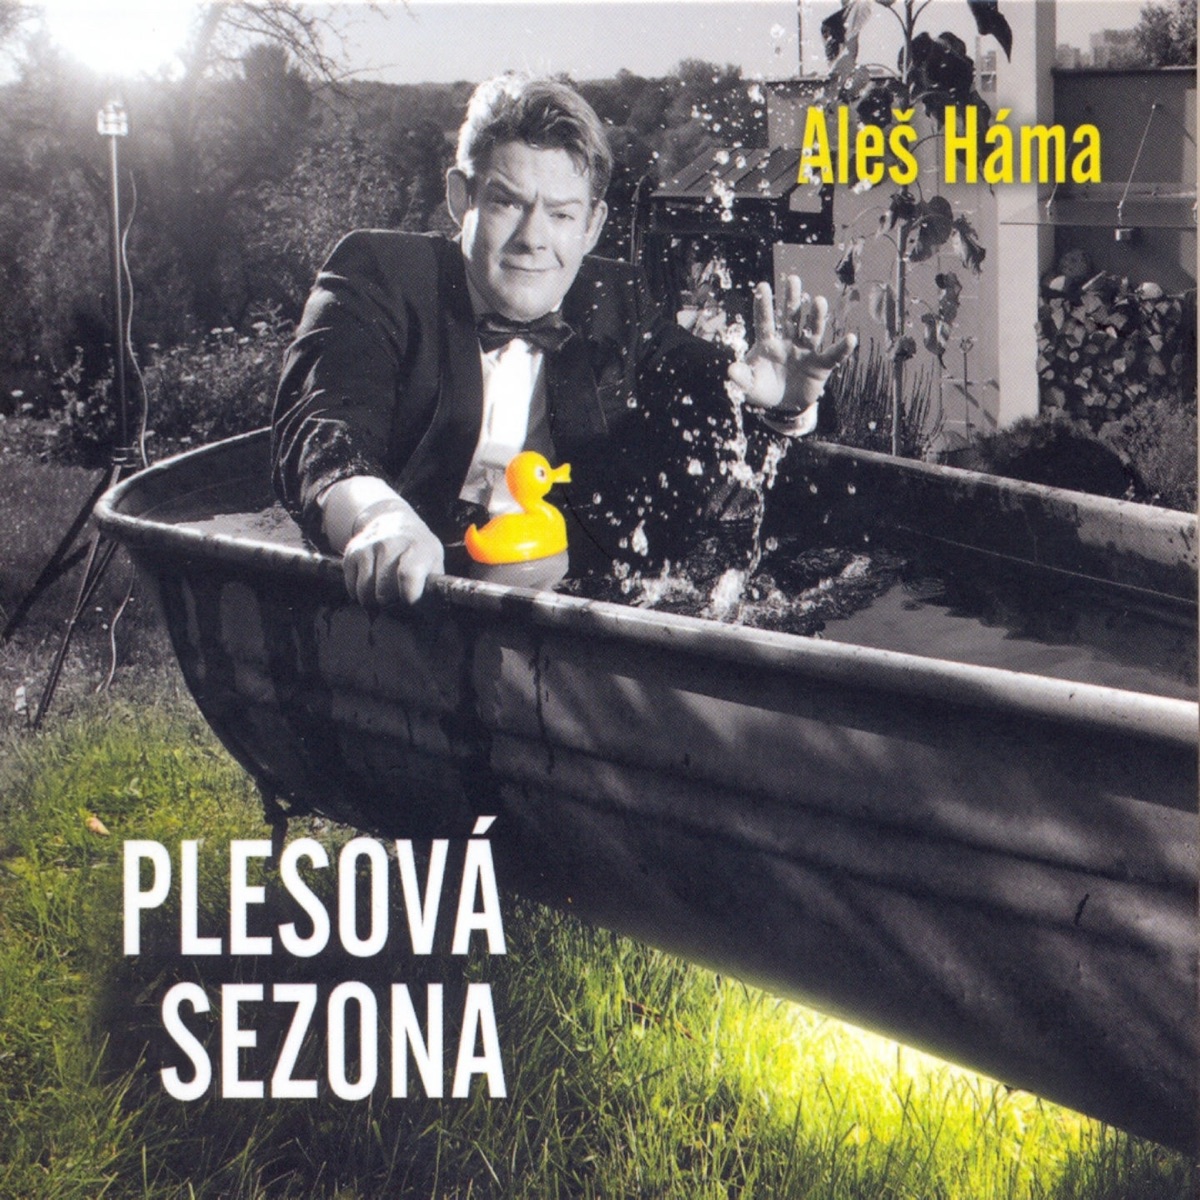 Plesová Sezona - Album by Ales Hama - Apple Music